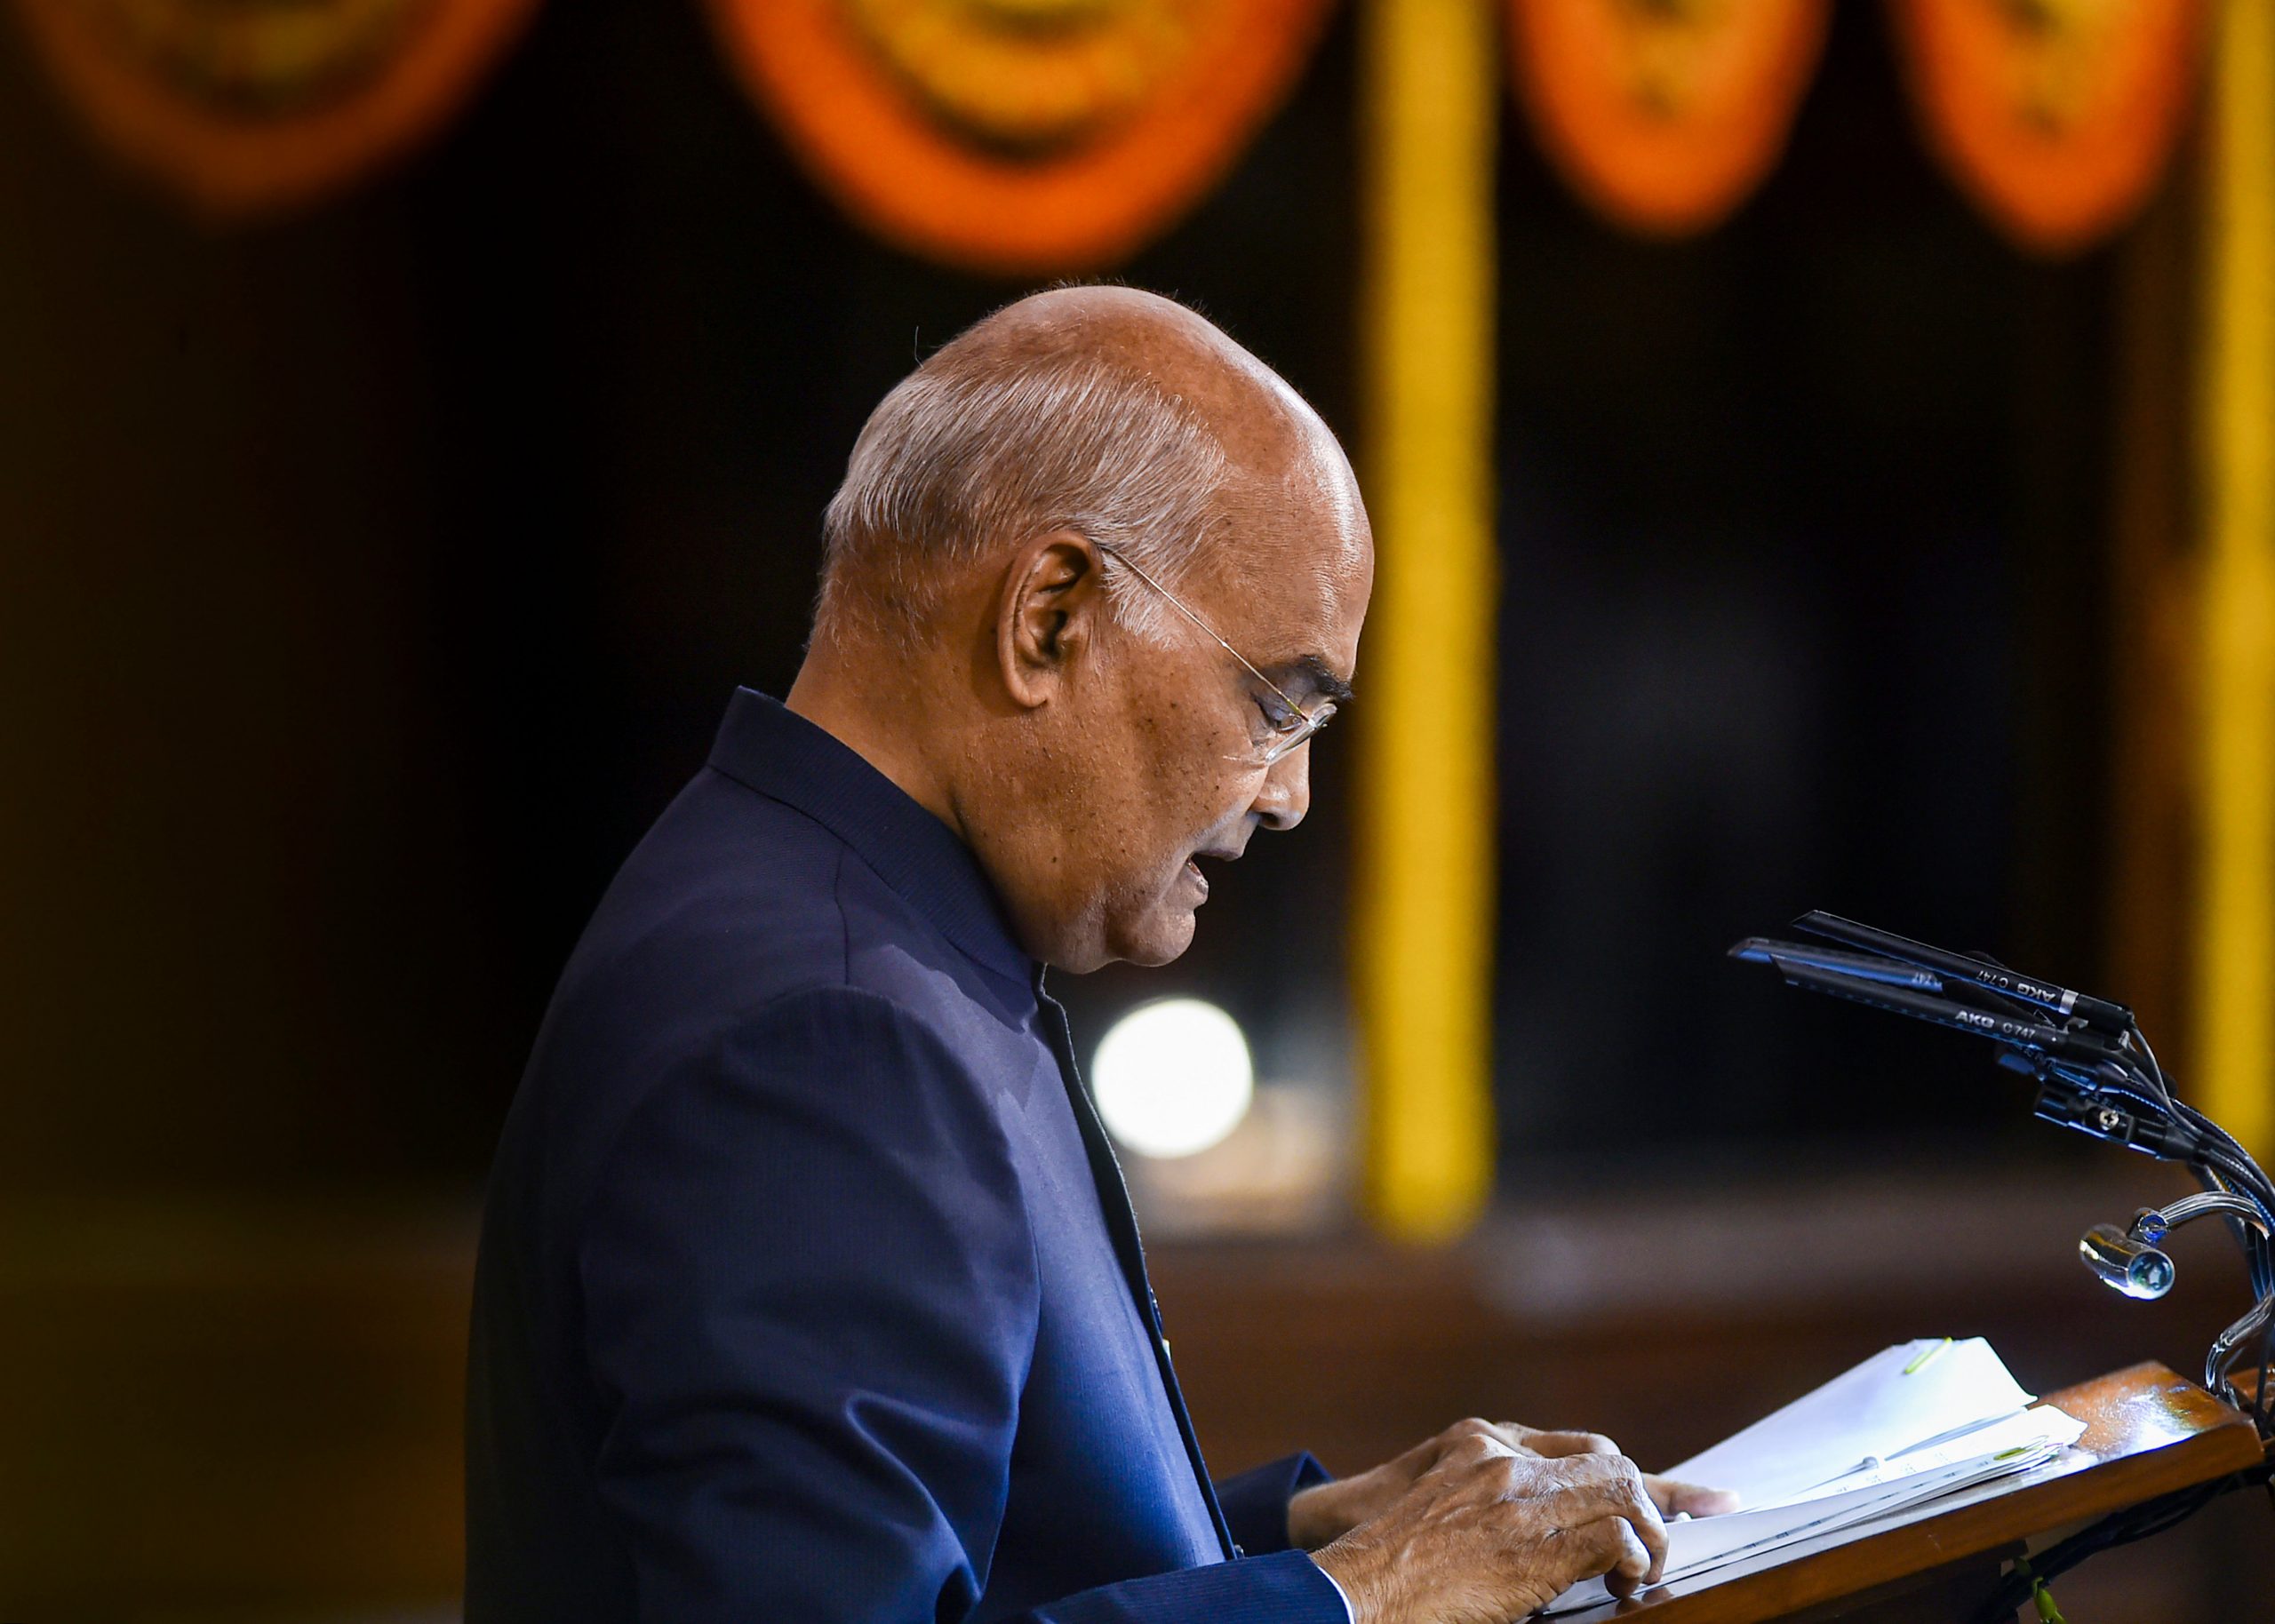 Kovind stresses on ‘Gandhian mould’, democracy in last words as president